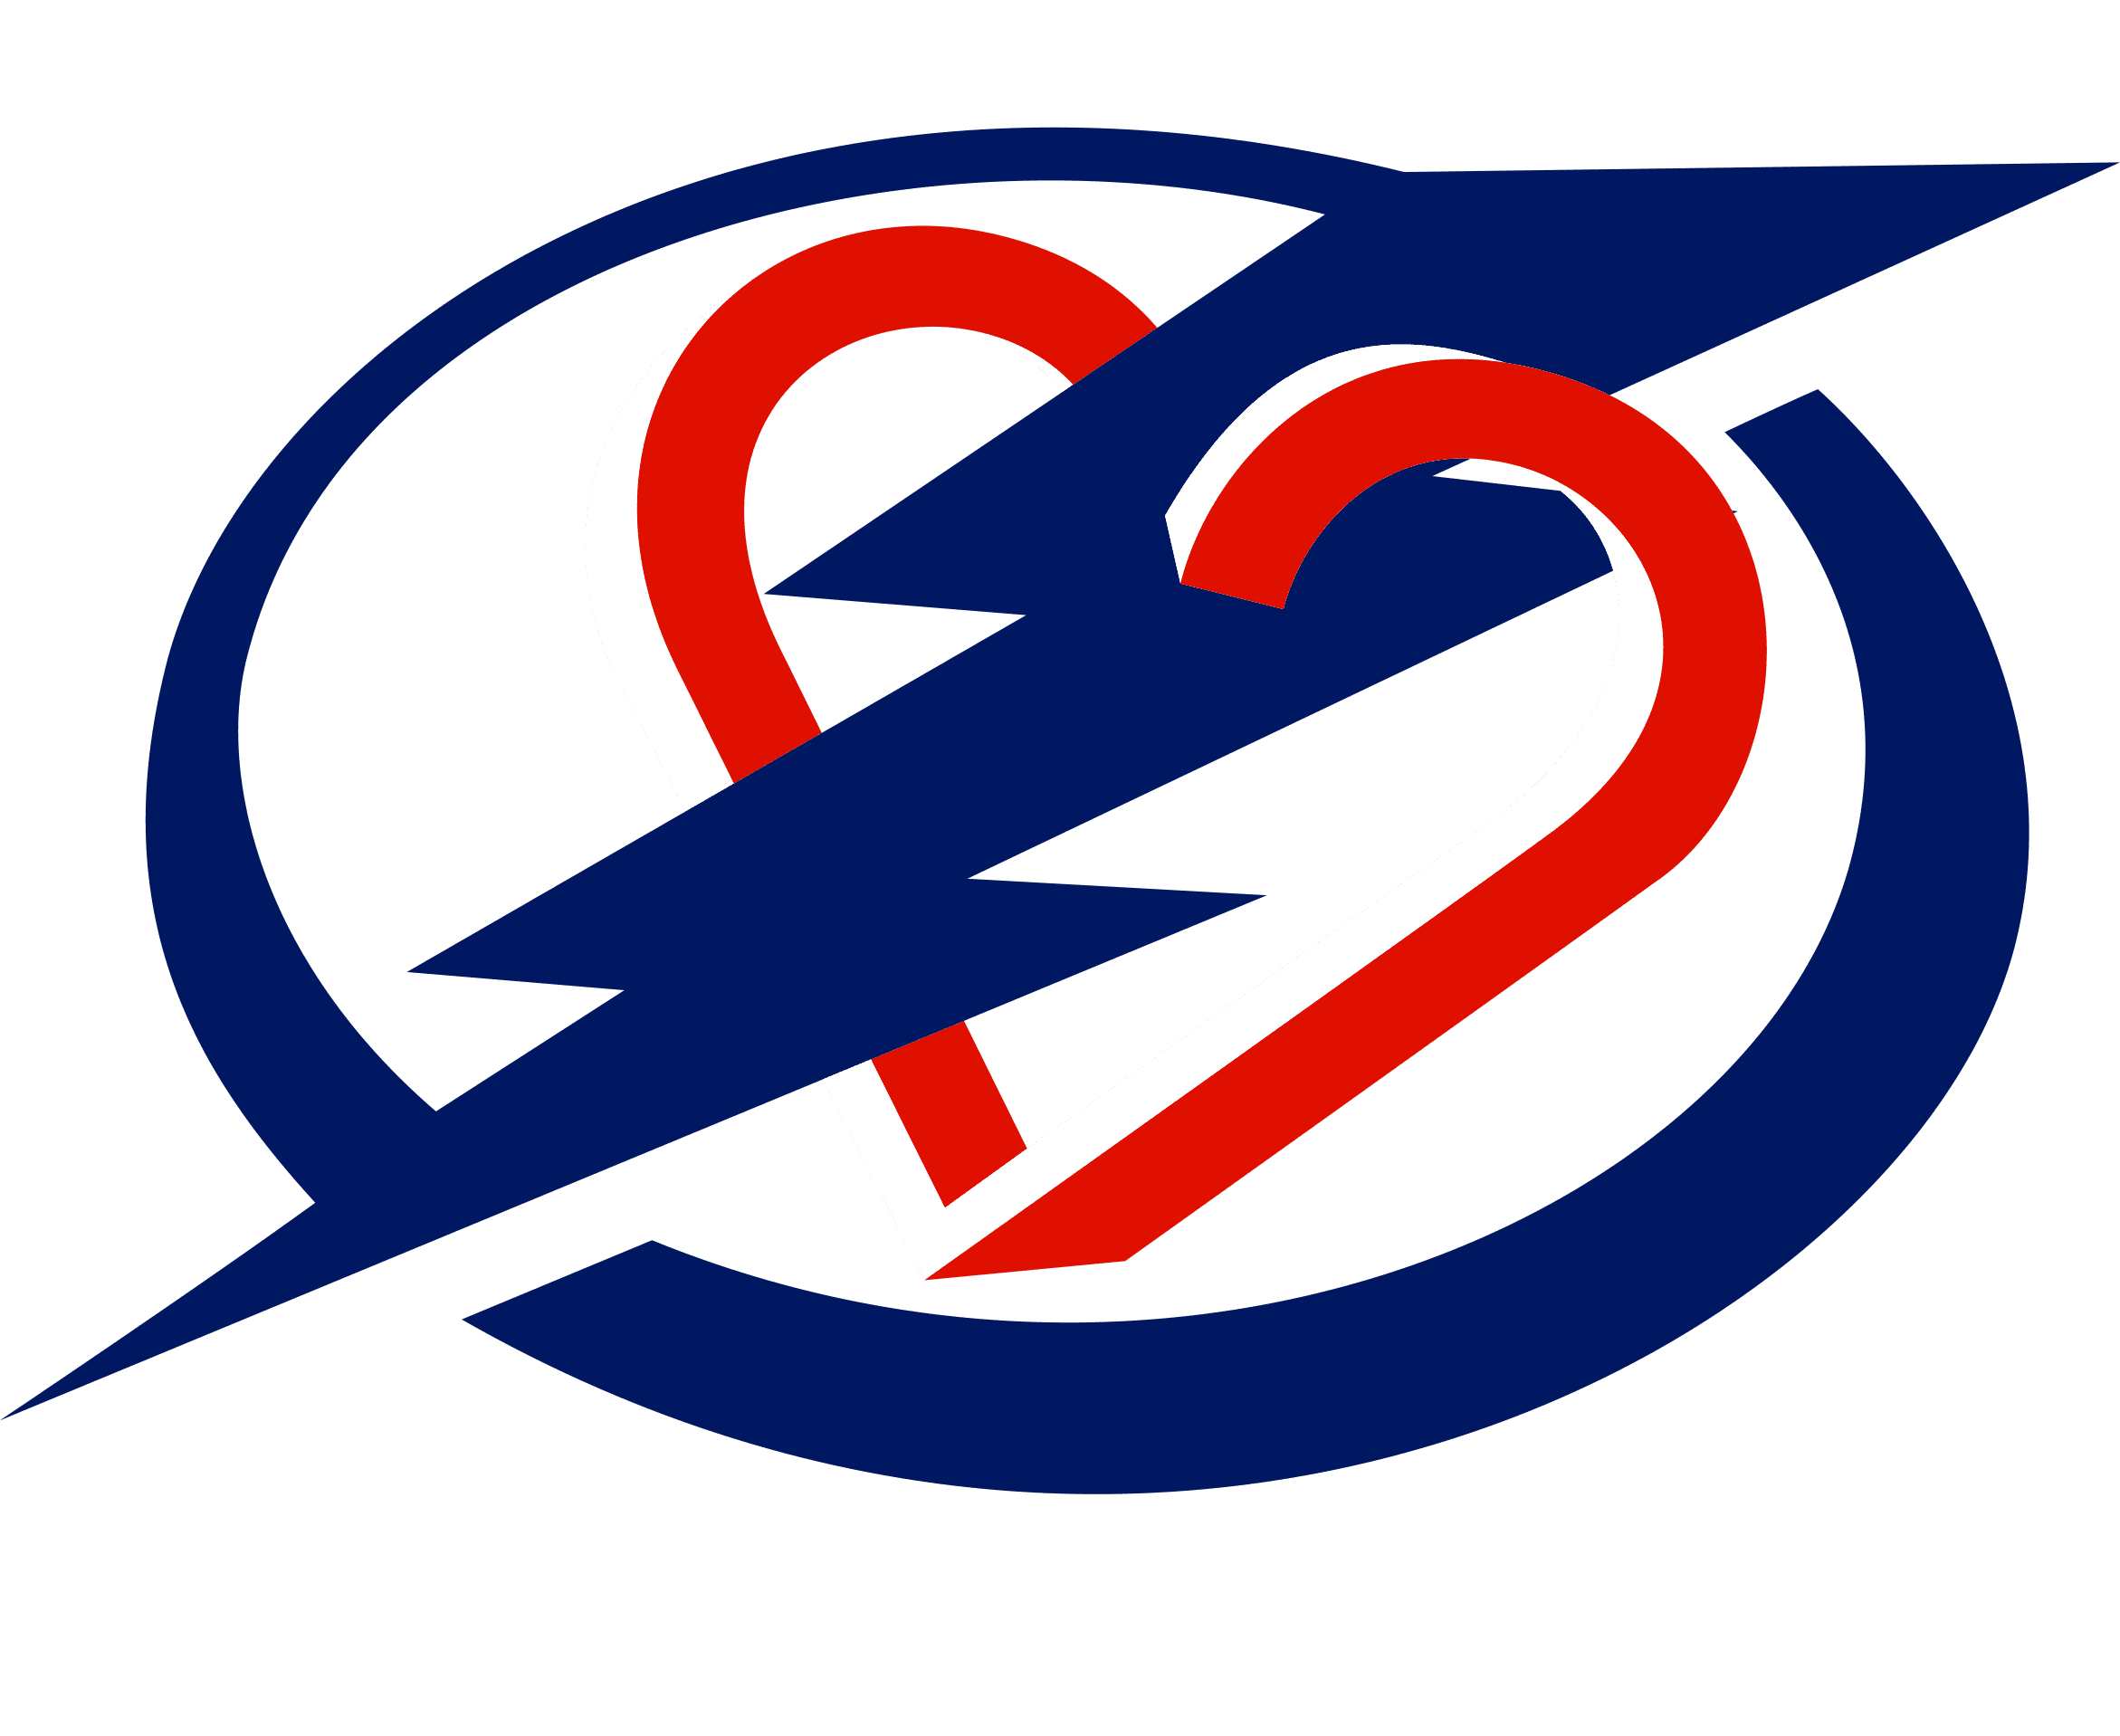 Tampa Sports Teams Tampa Bay Rays Tampa Bay Buccaneers Tampa Bay Lightning  SVG PNG Cricut Clip Art 